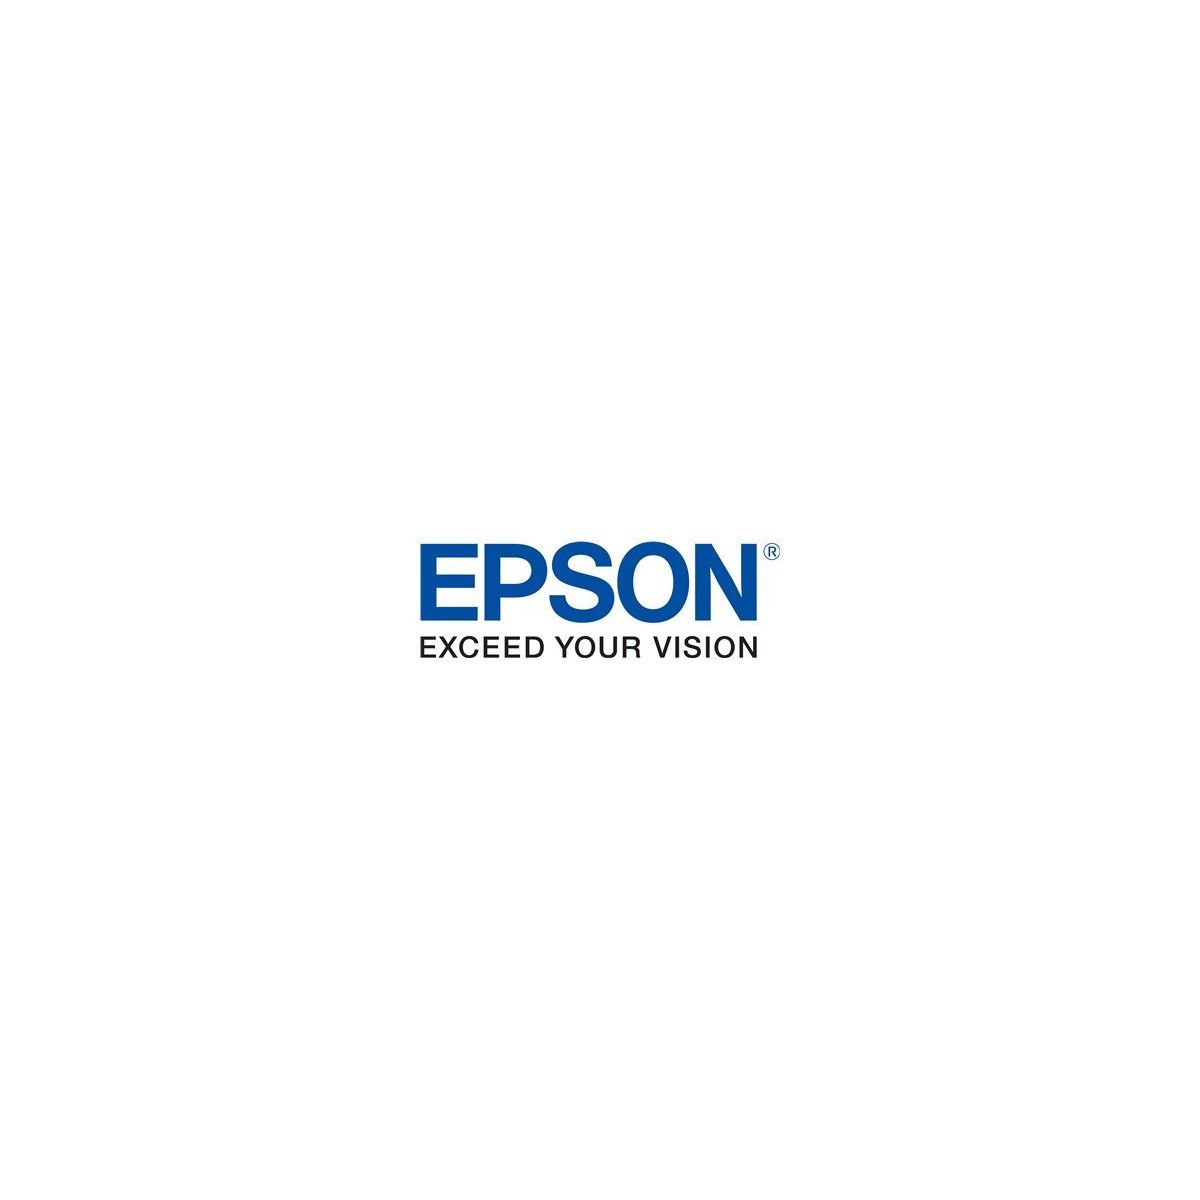 Epson 2109263 - Epson AcuLaser C9100 - 9100B - 9100dt - 9100ps